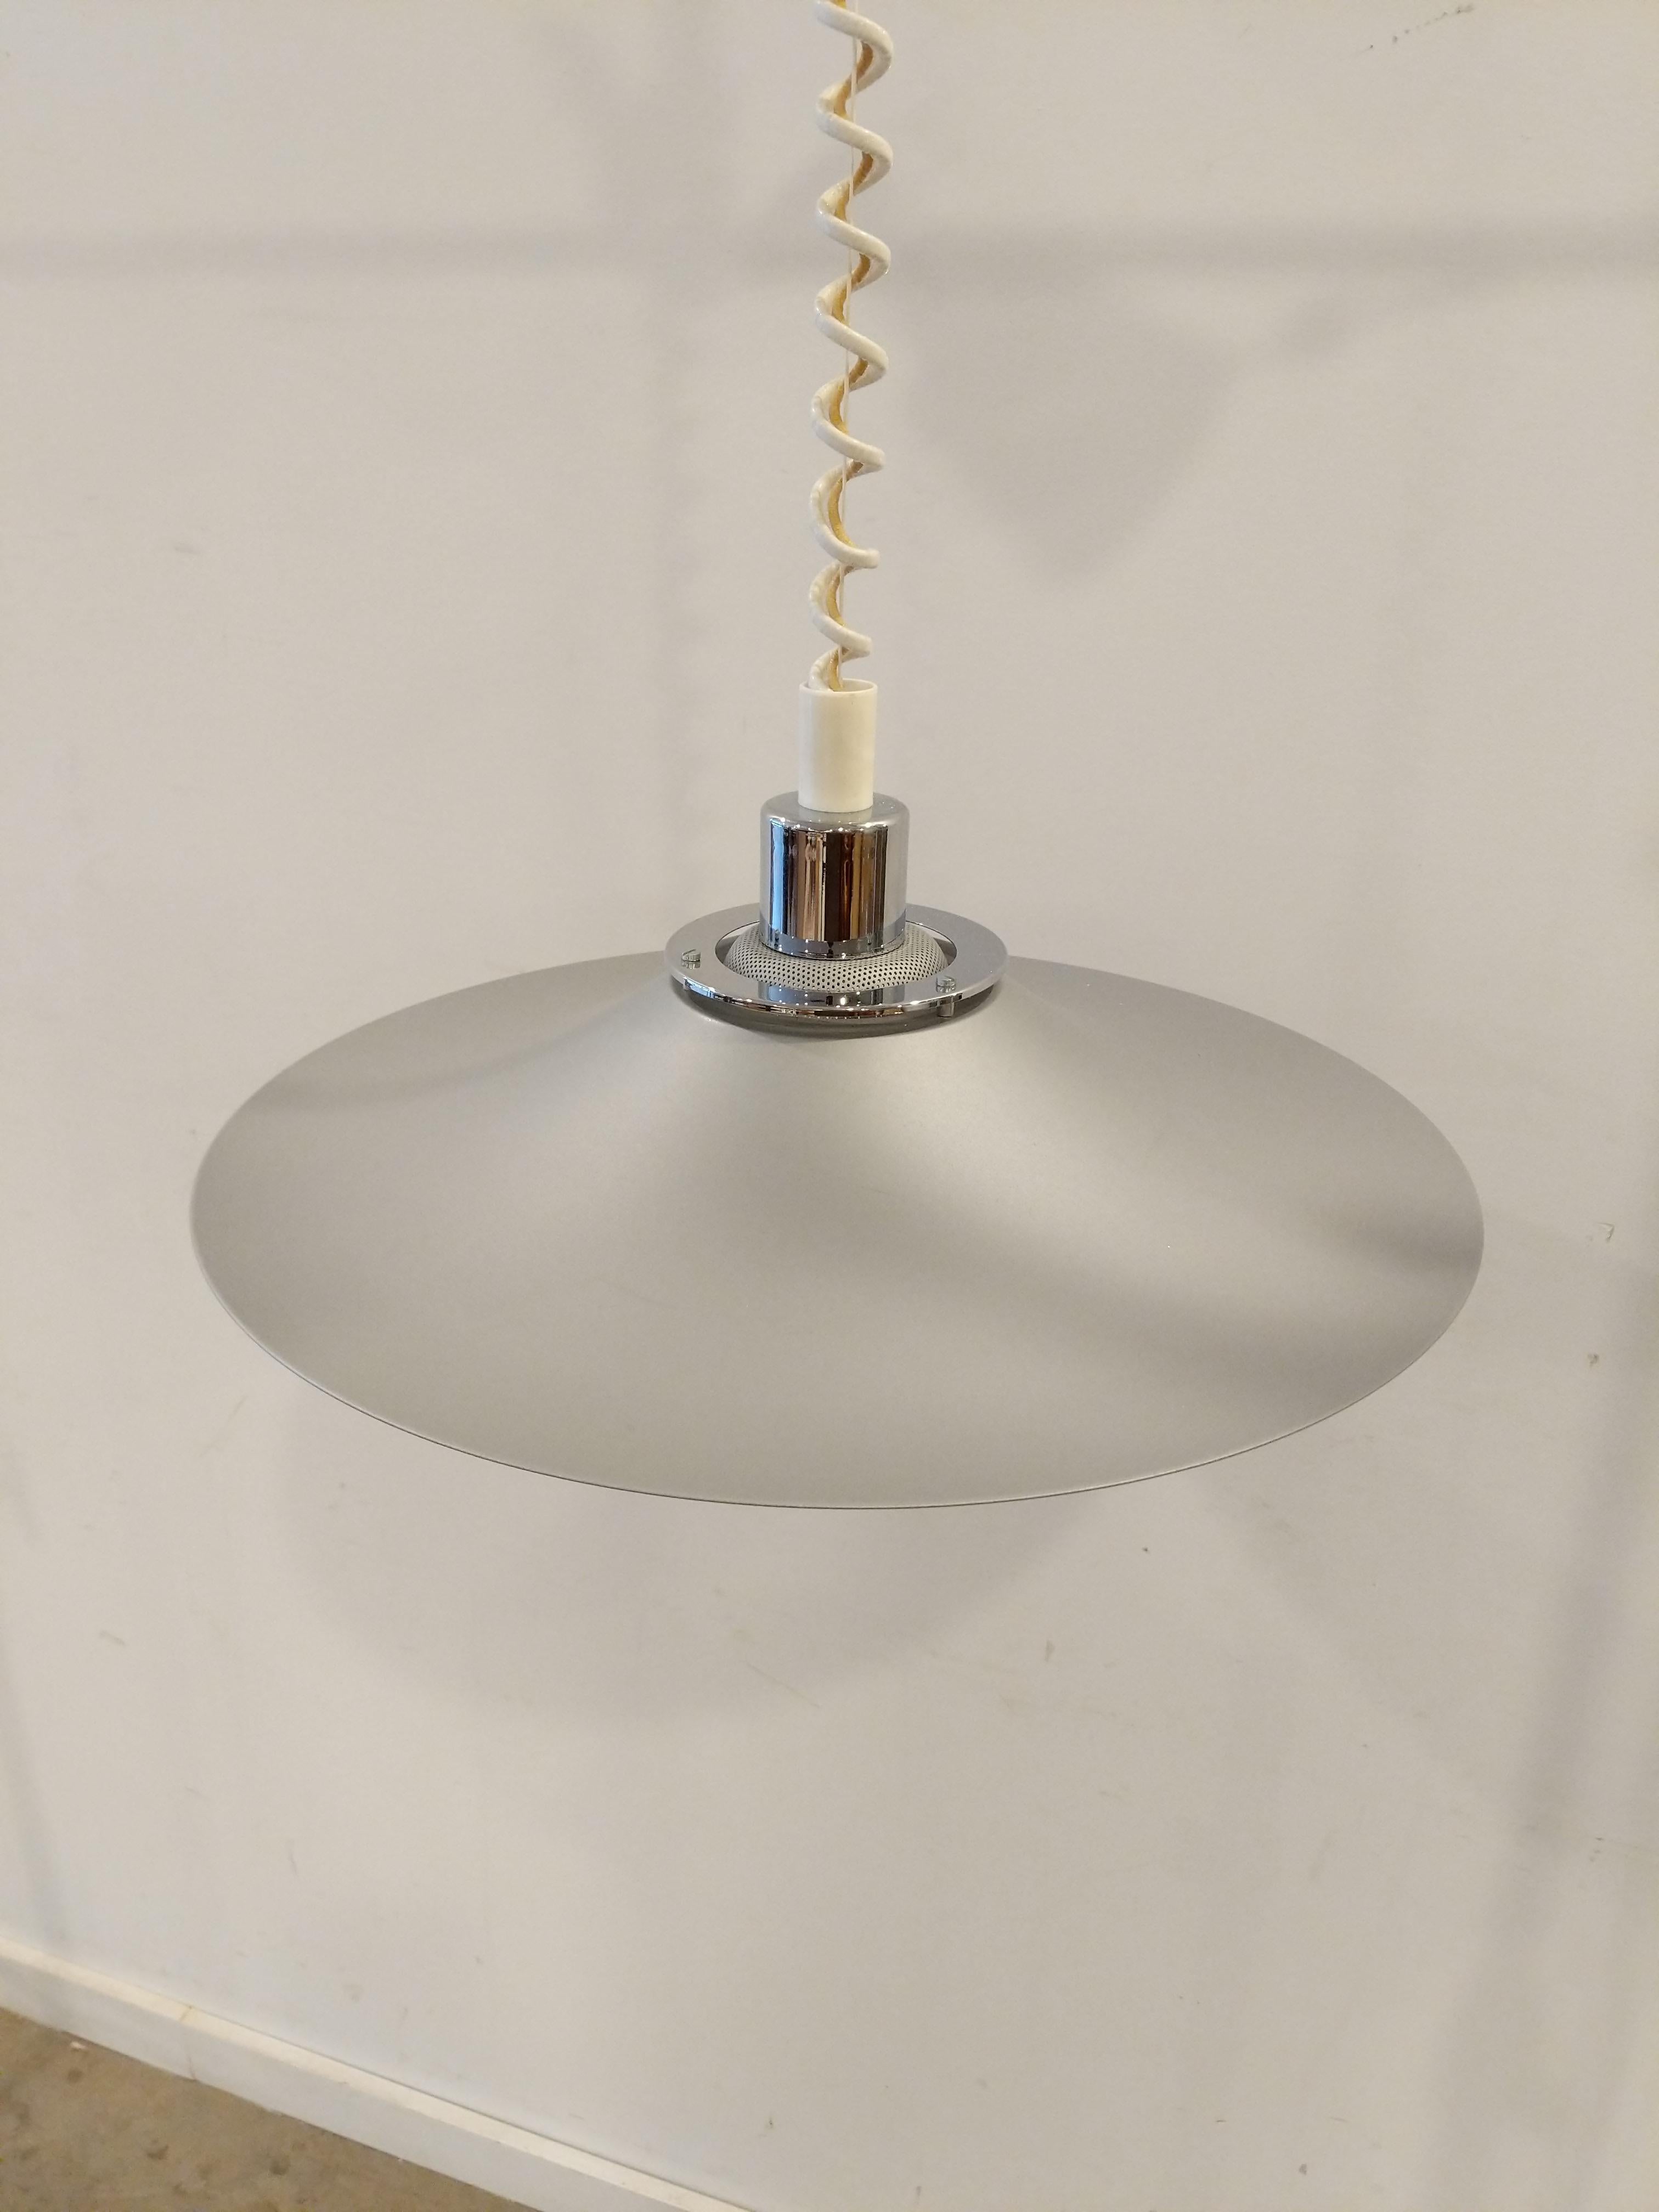 Authentic vintage mid century Danish / Scandinavian Modern hanging lamp / ceiling lamp / pendant light.

